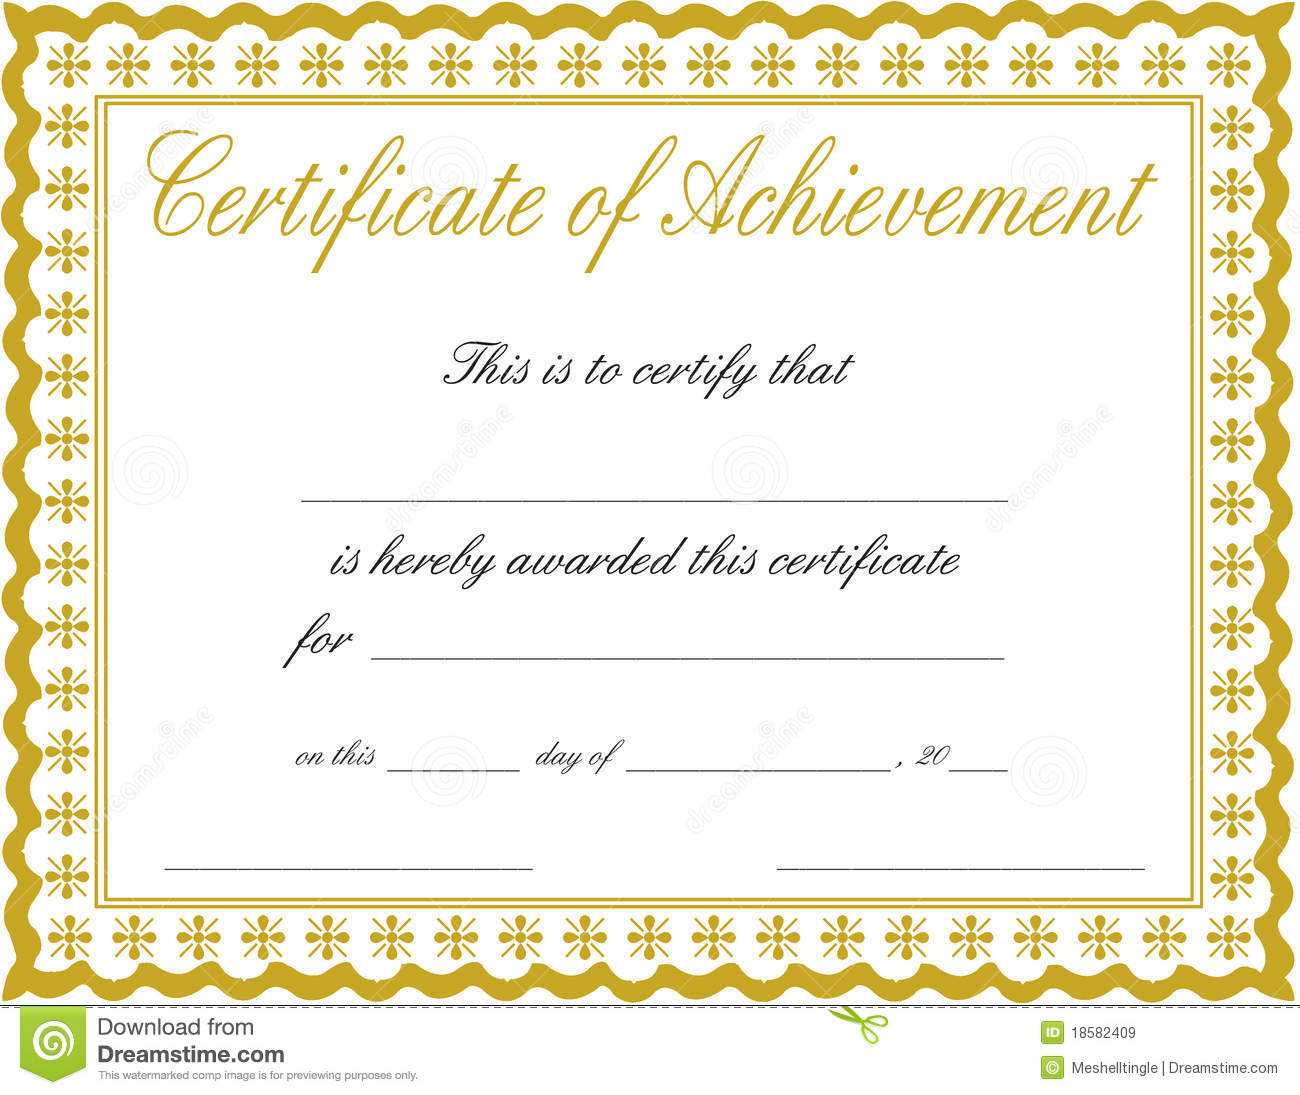 008 Certificate Of Achievement Template Free Download Word In Free Certificate Of Excellence Template